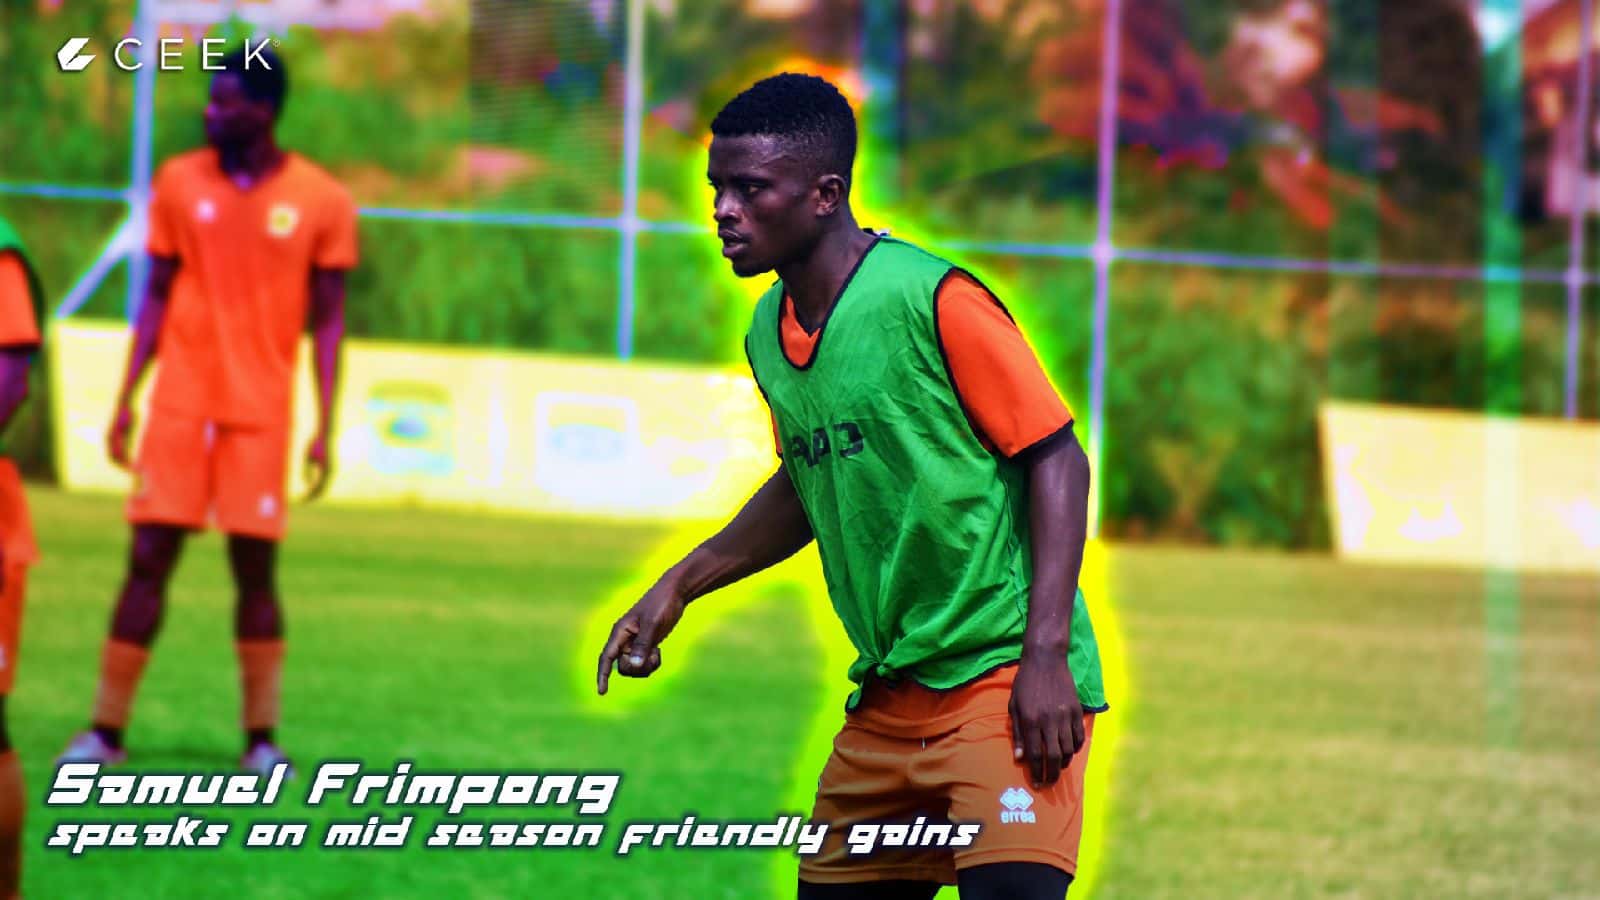 Samuel Frimpong speaks on mid season friendly gains